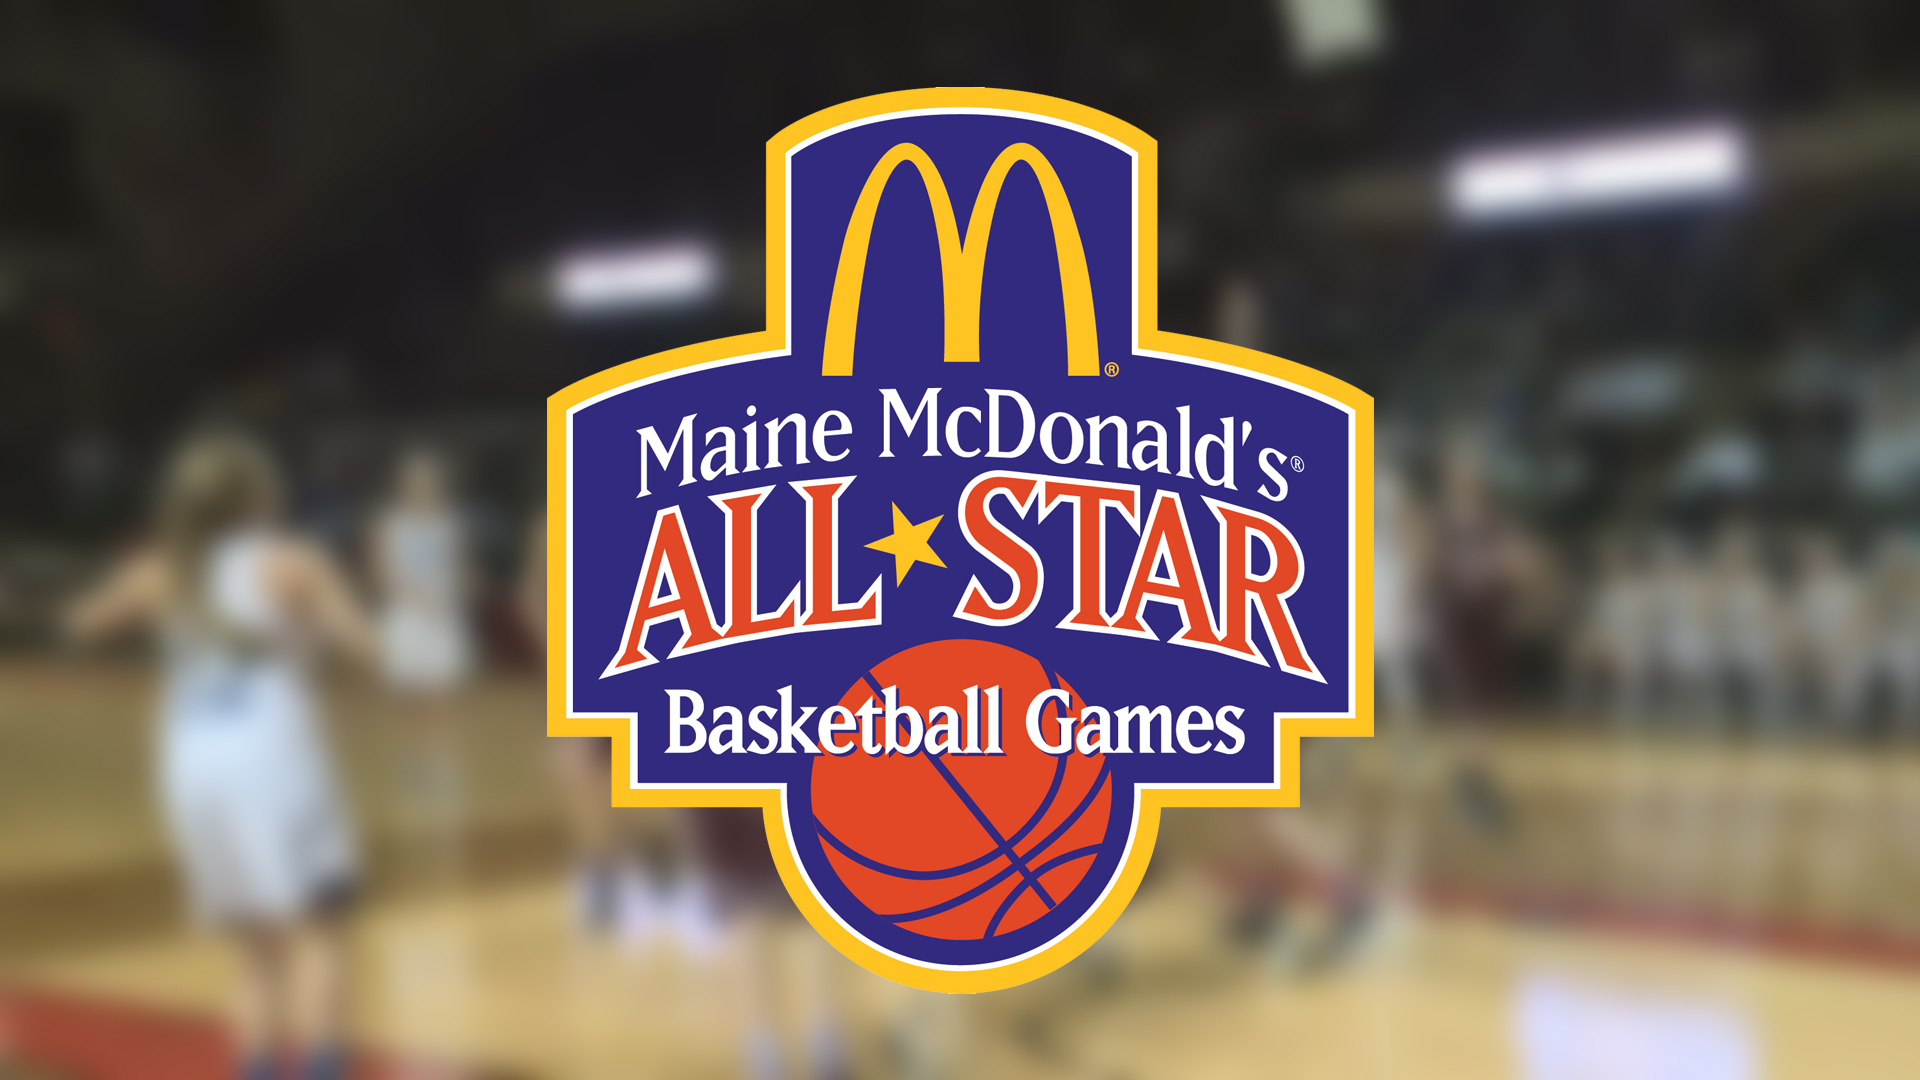 McDonald's AllStar Basketball Games getting underway